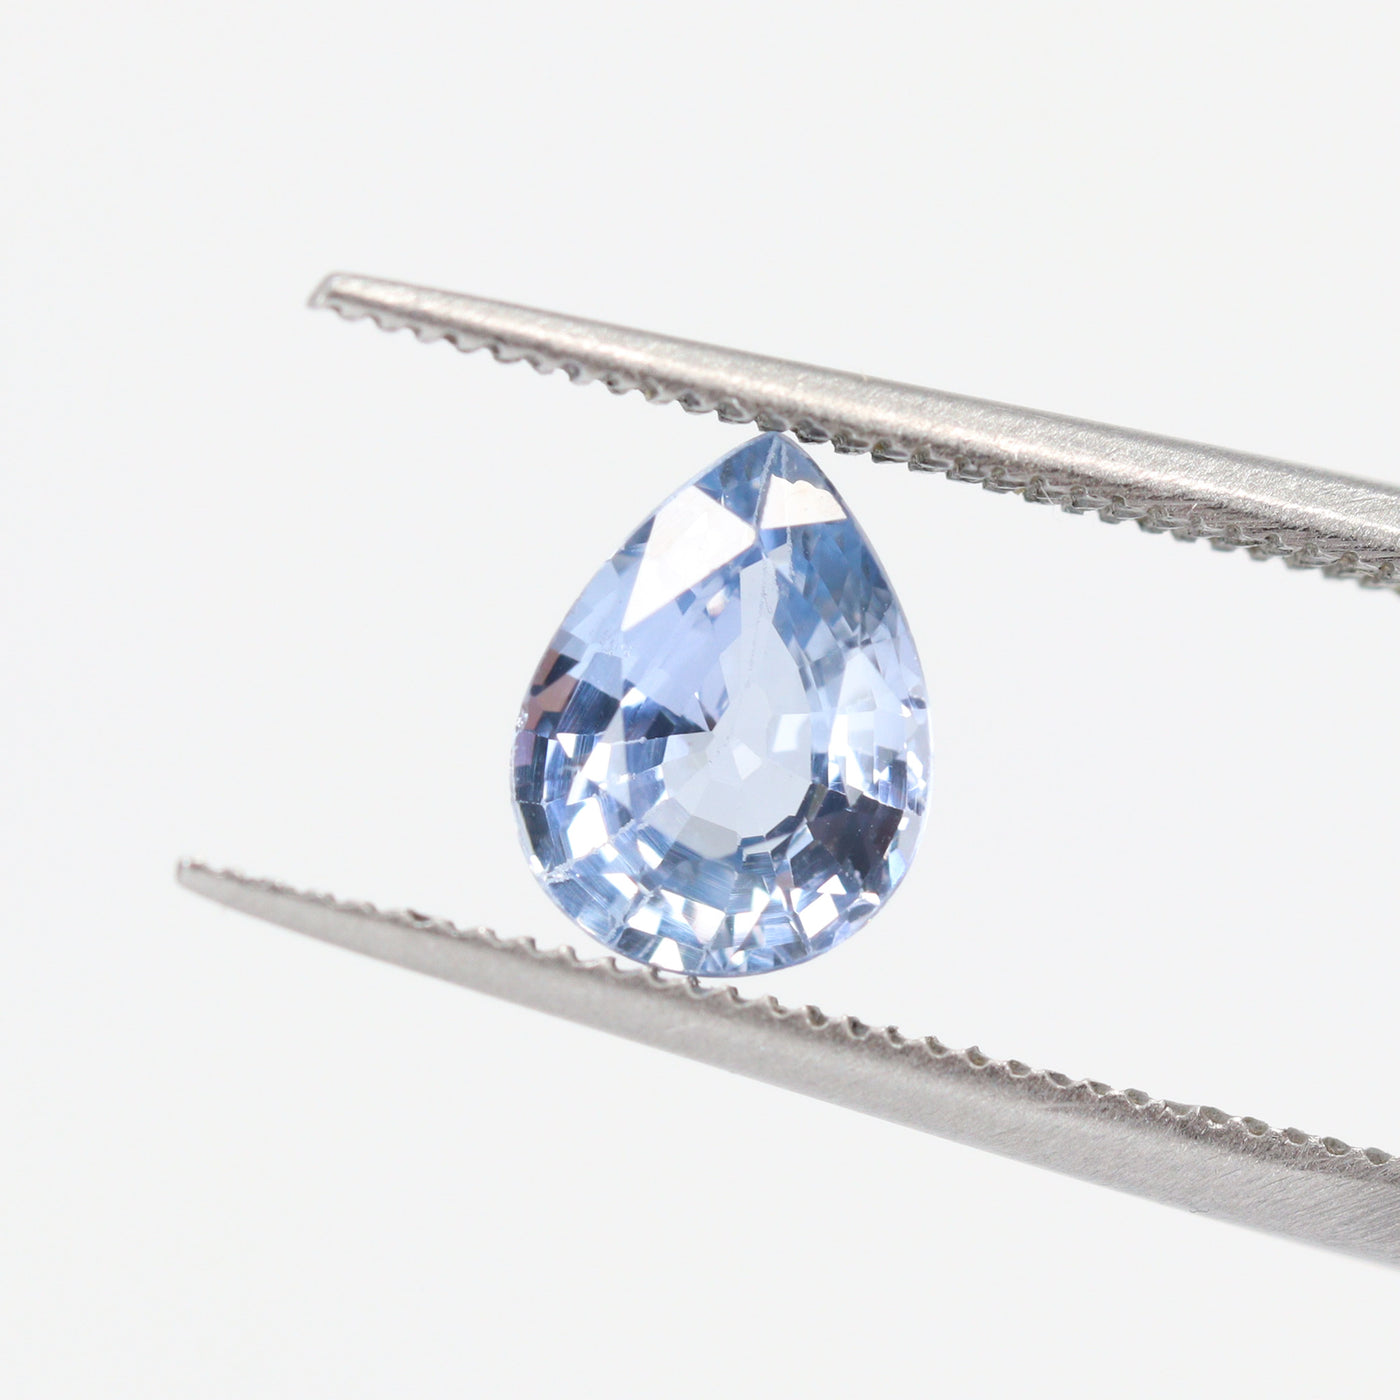 Blue Sapphire | 1.62ct Pear/Teardrop Cut, Loose Gemstone